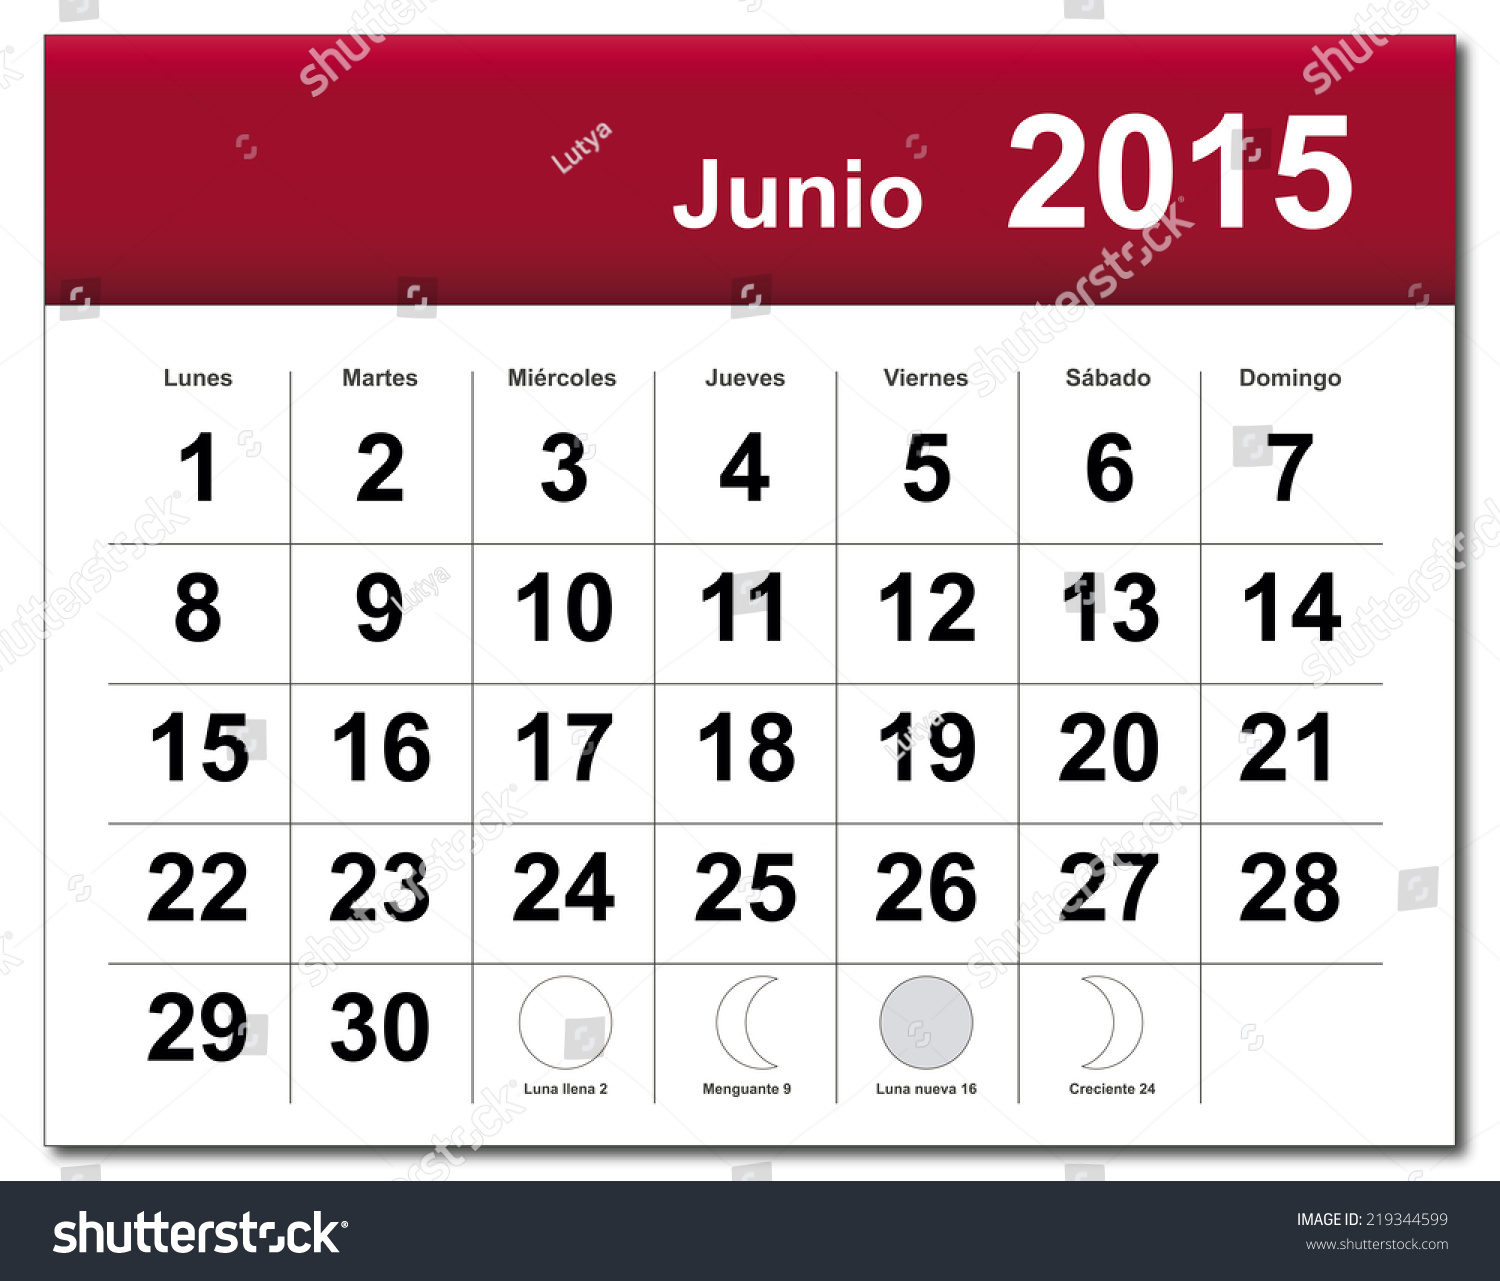 spanish-version-june-2015-calendar-stock-illustration-219344599